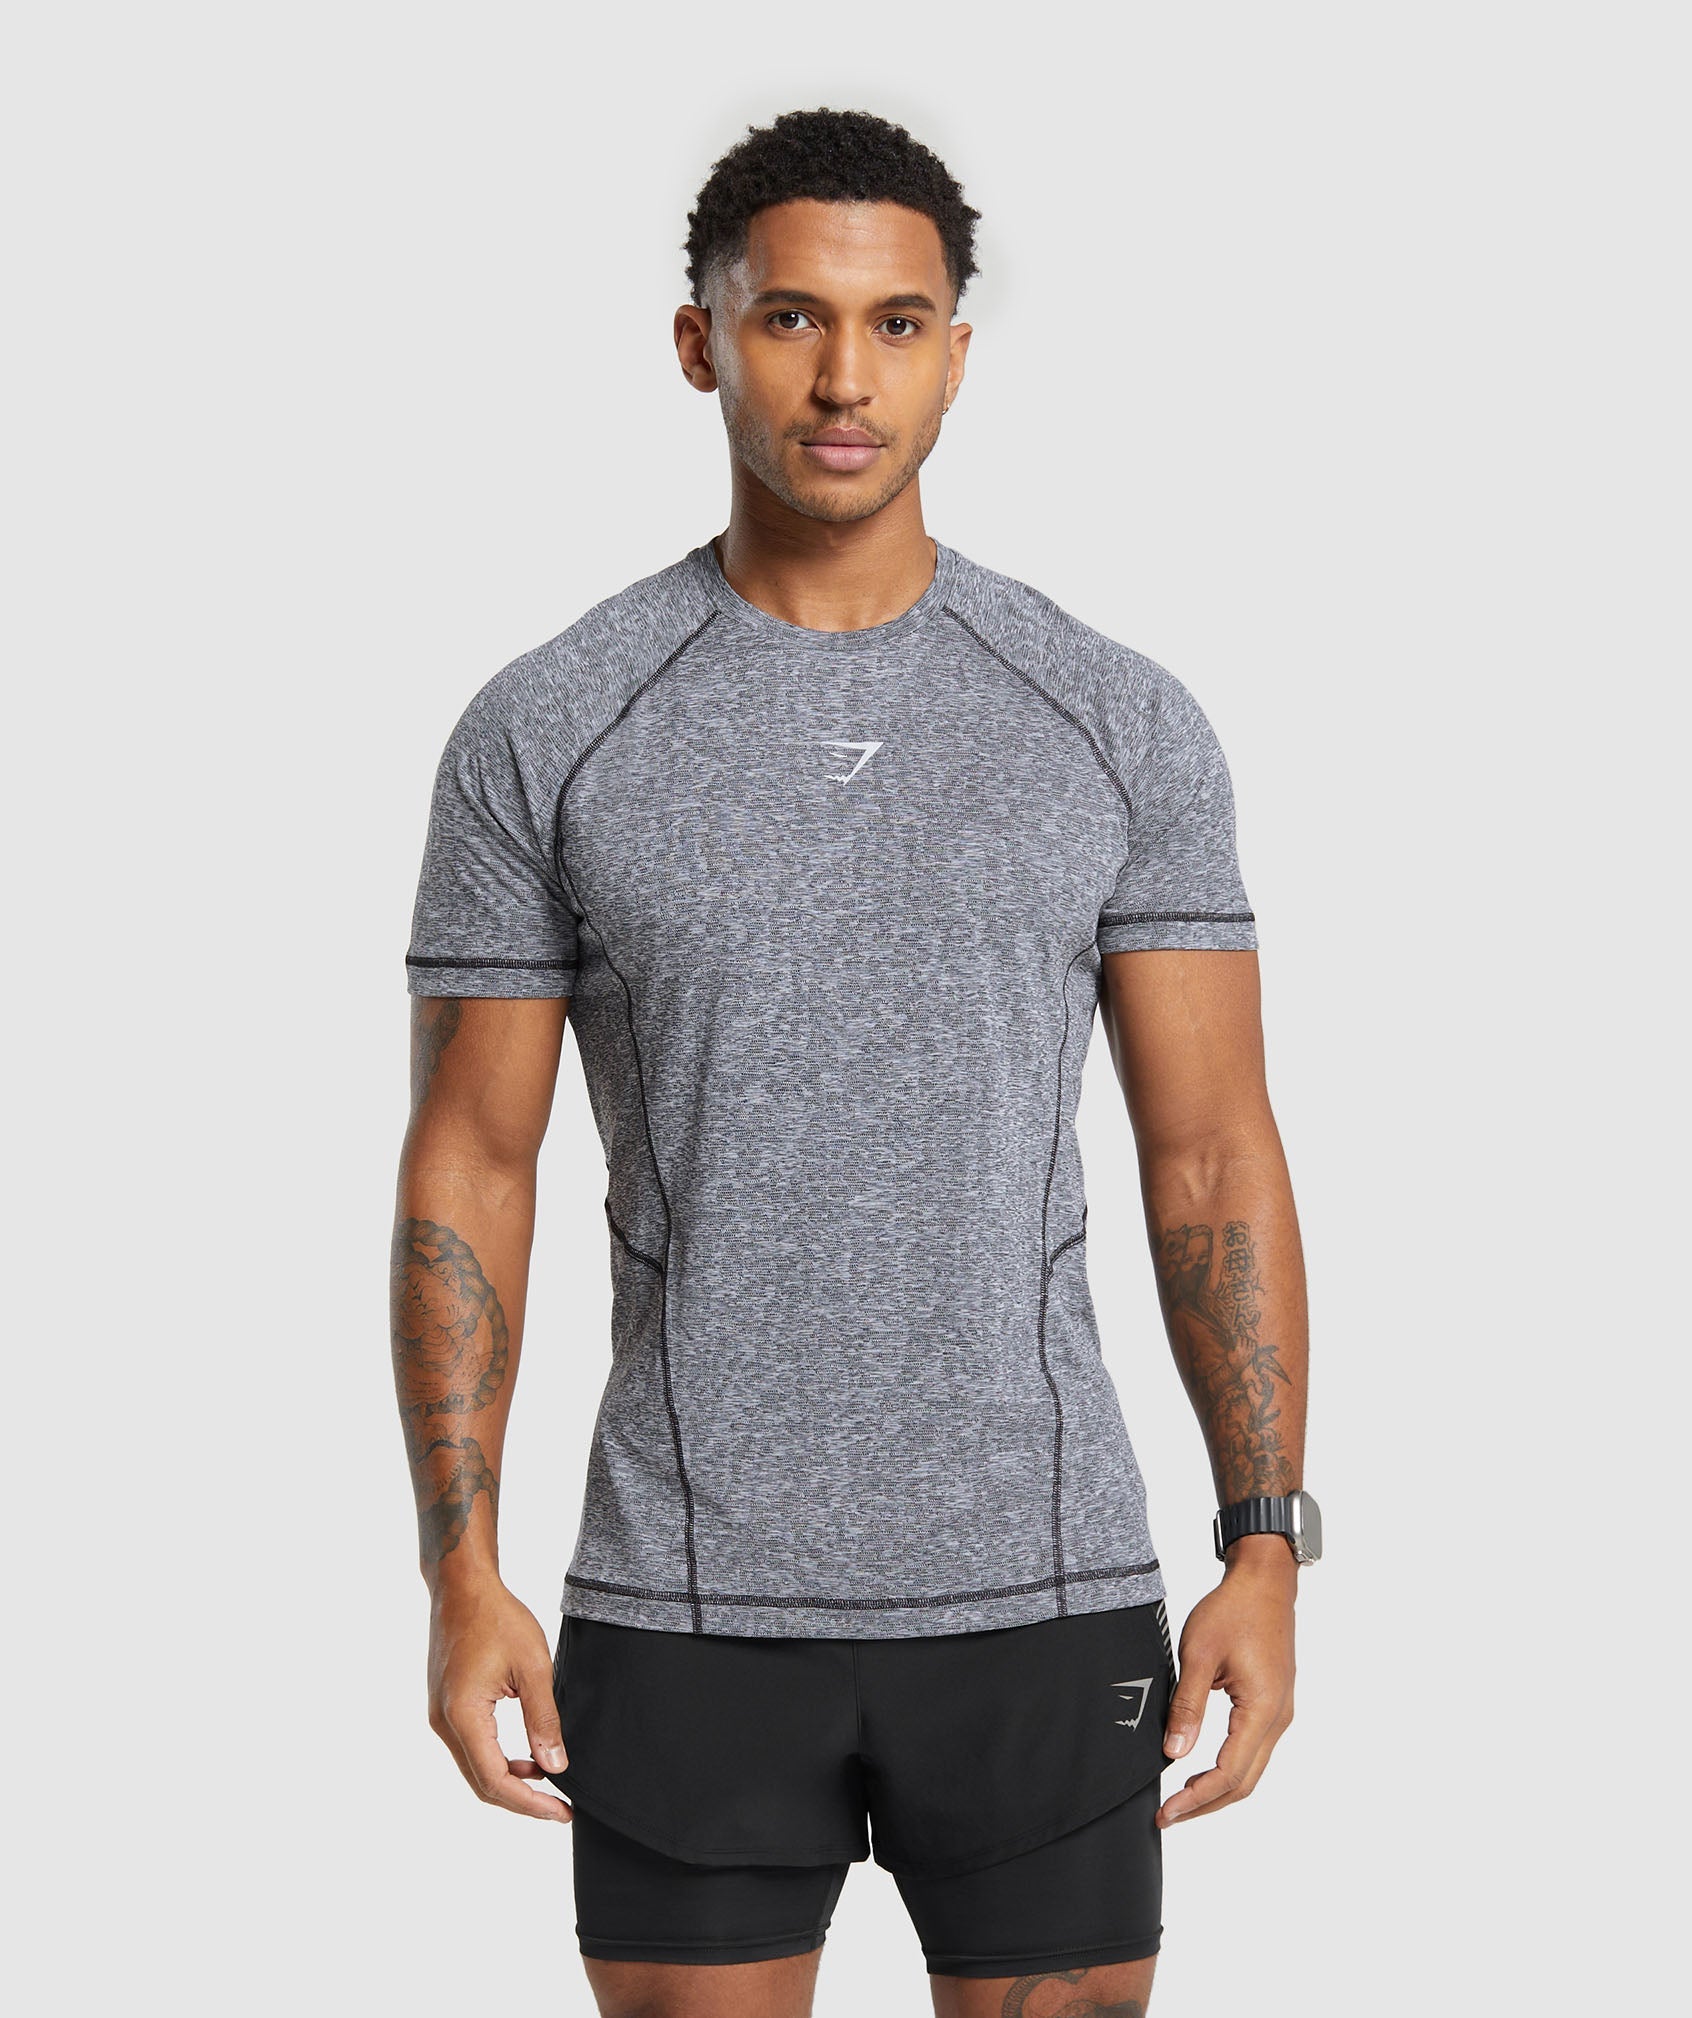 Gymshark Apex T-Shirt - Black/Light Grey | Gymshark